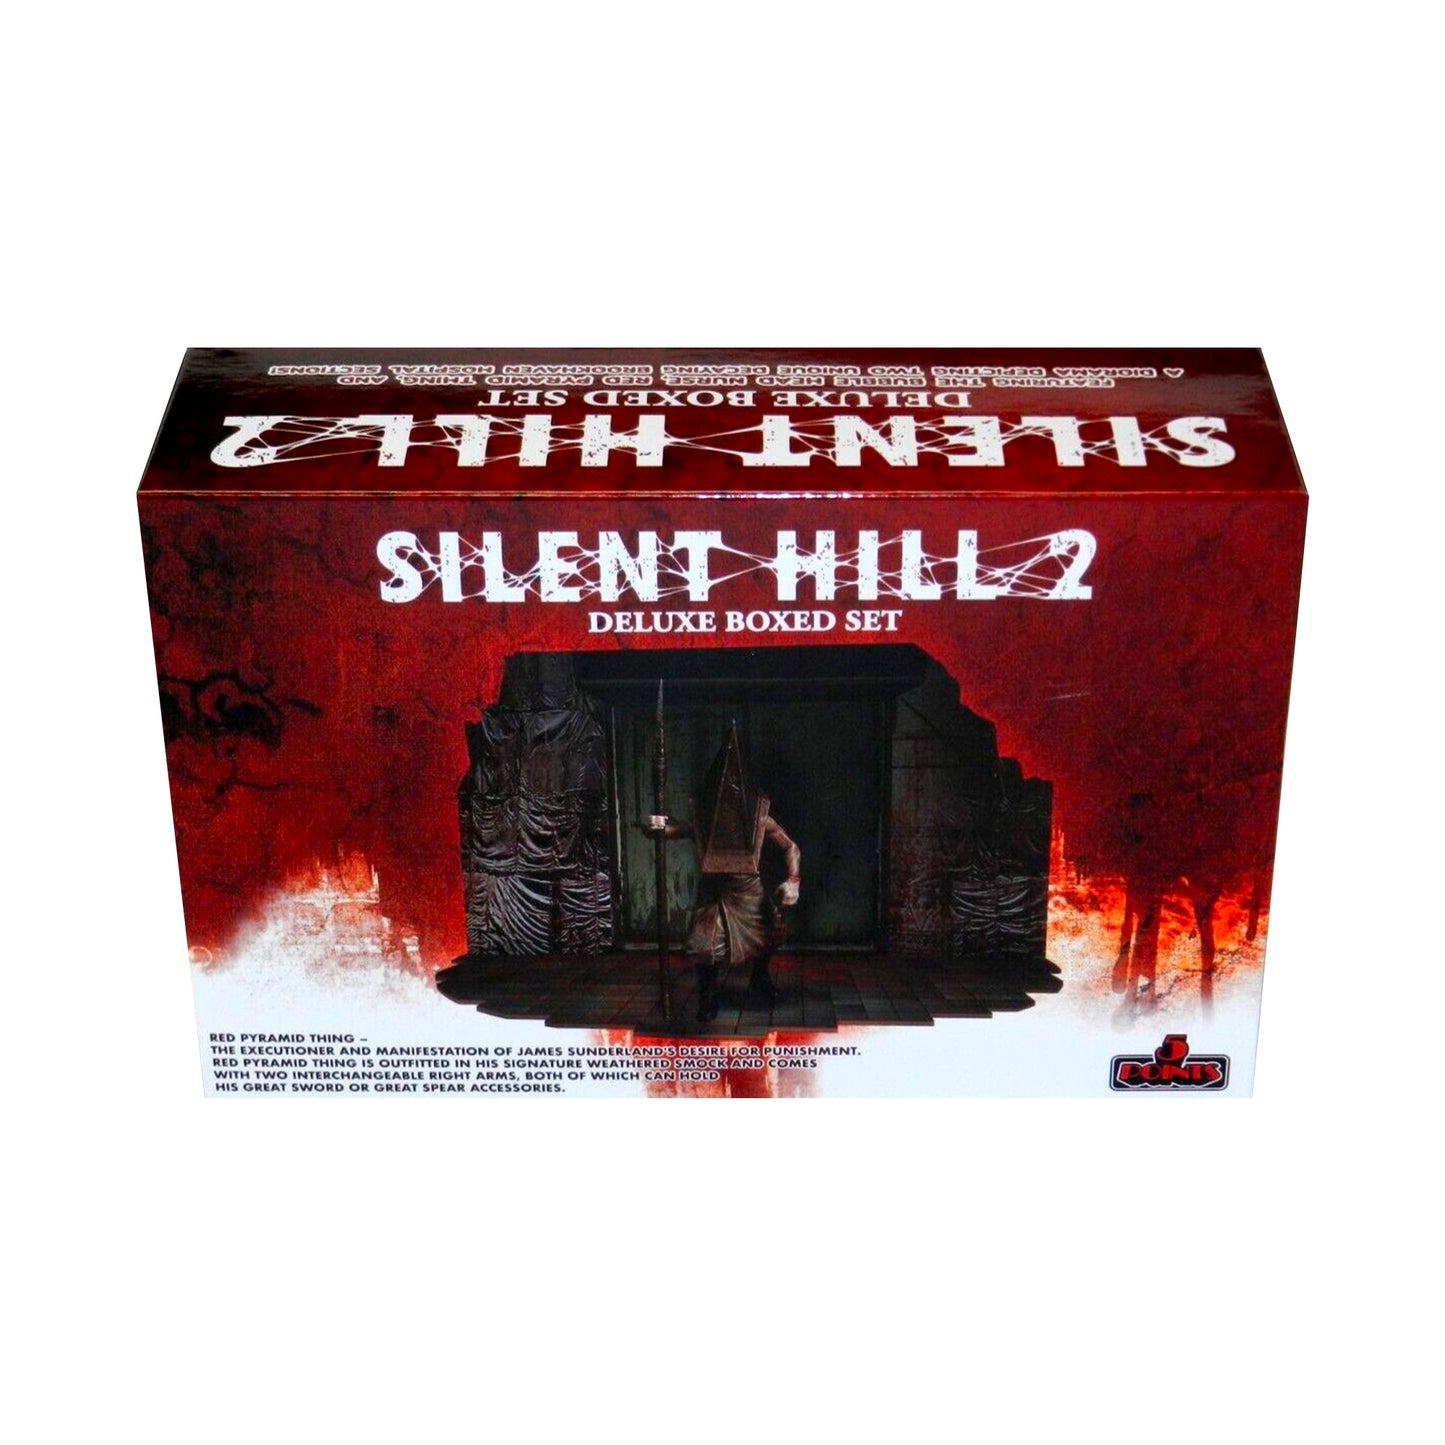 MEZCO TOYZ: 5 Points - Silent Hill 2 Deluxe Boxed Set